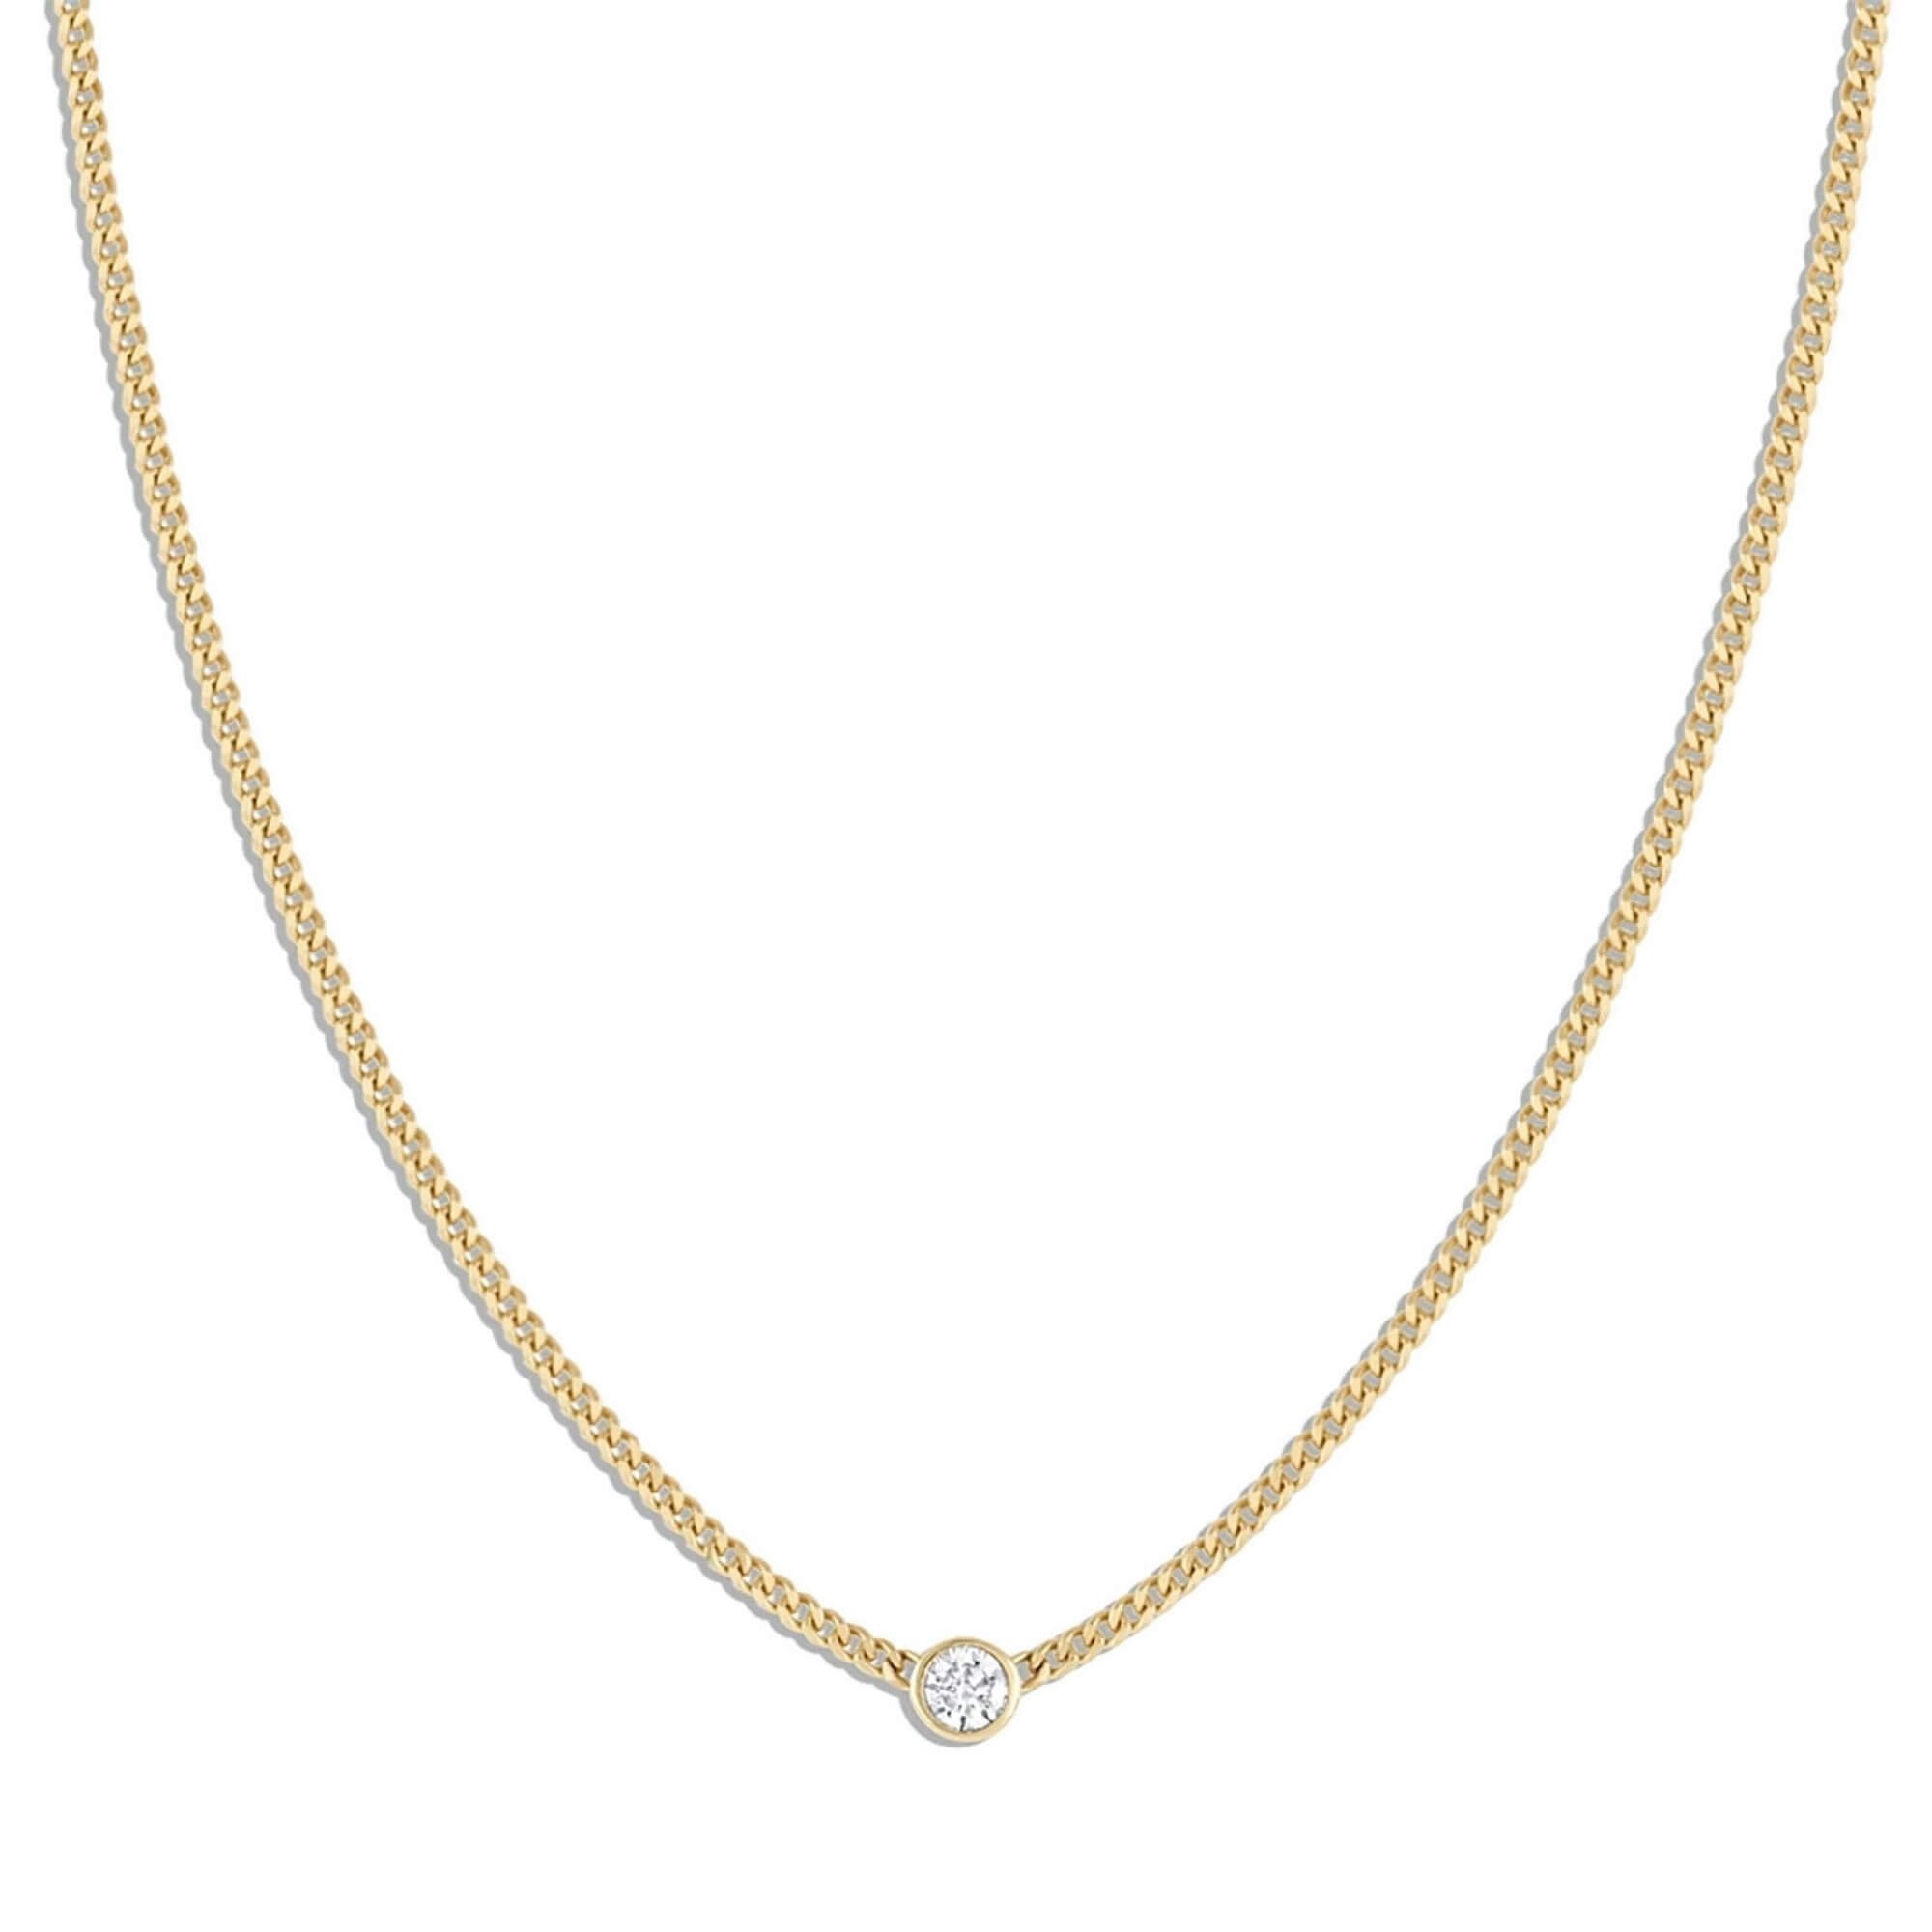 Gorjana “Wilder” necklace in 14k gold with diamond, $725 at Gorjana 